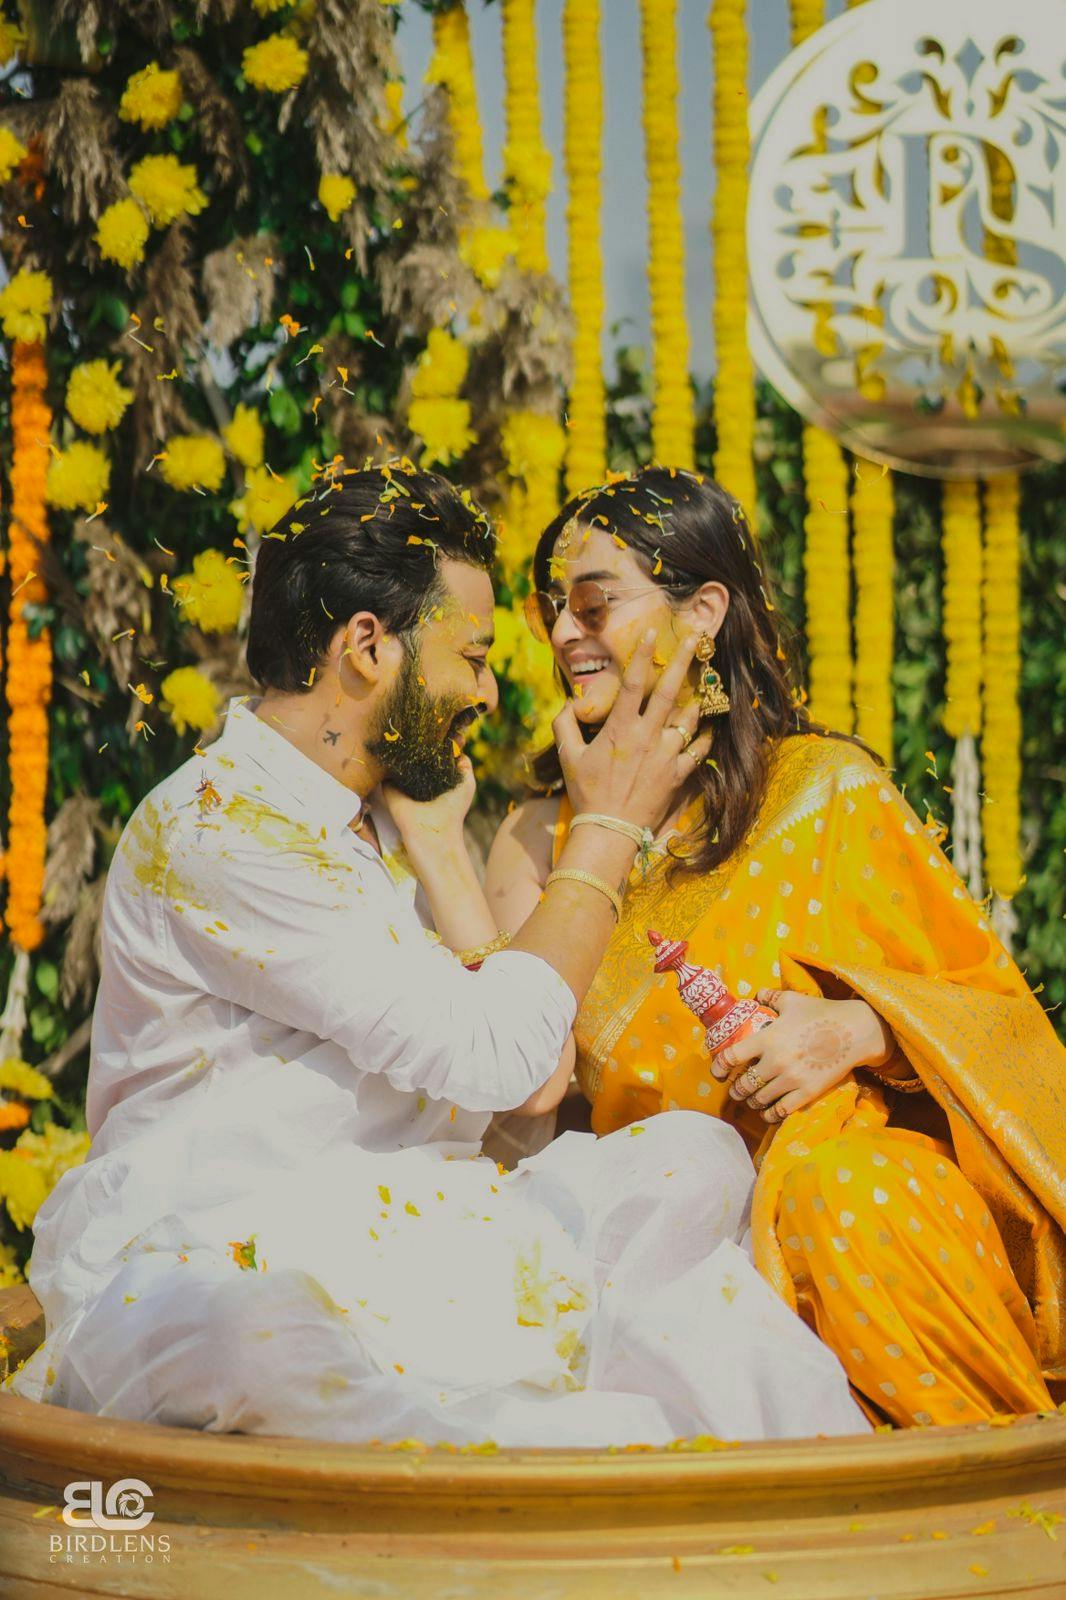 saurav das and darshana banik wedding photos